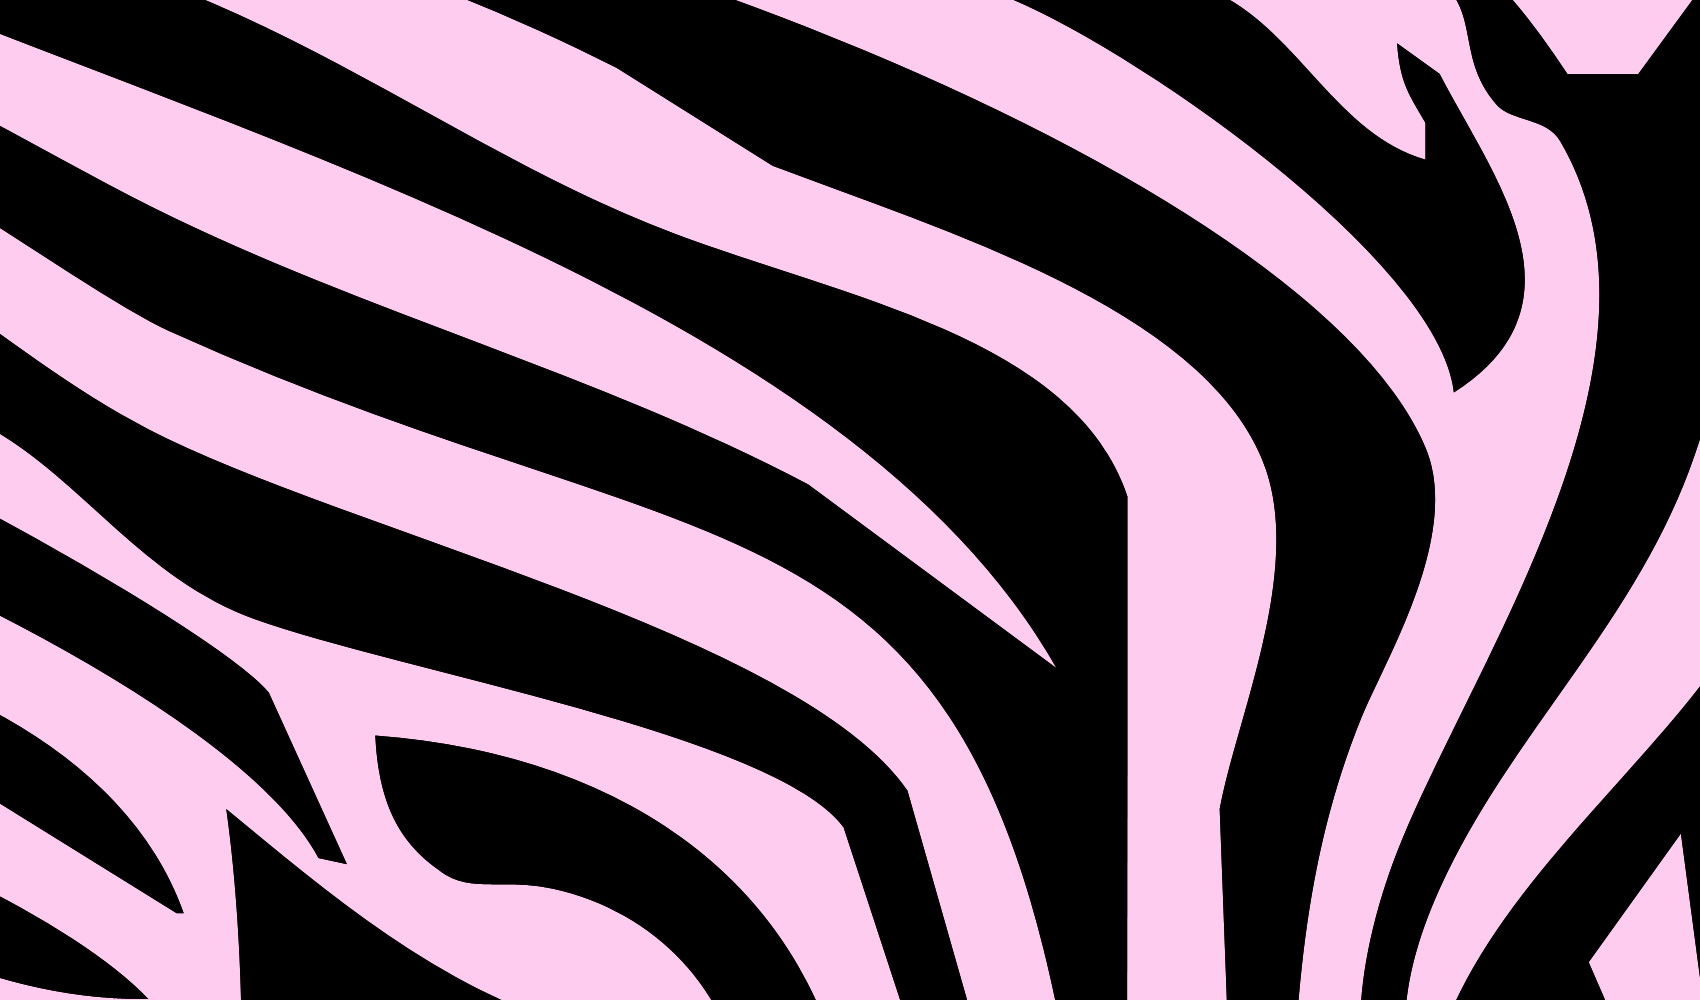 Zebra Print Background